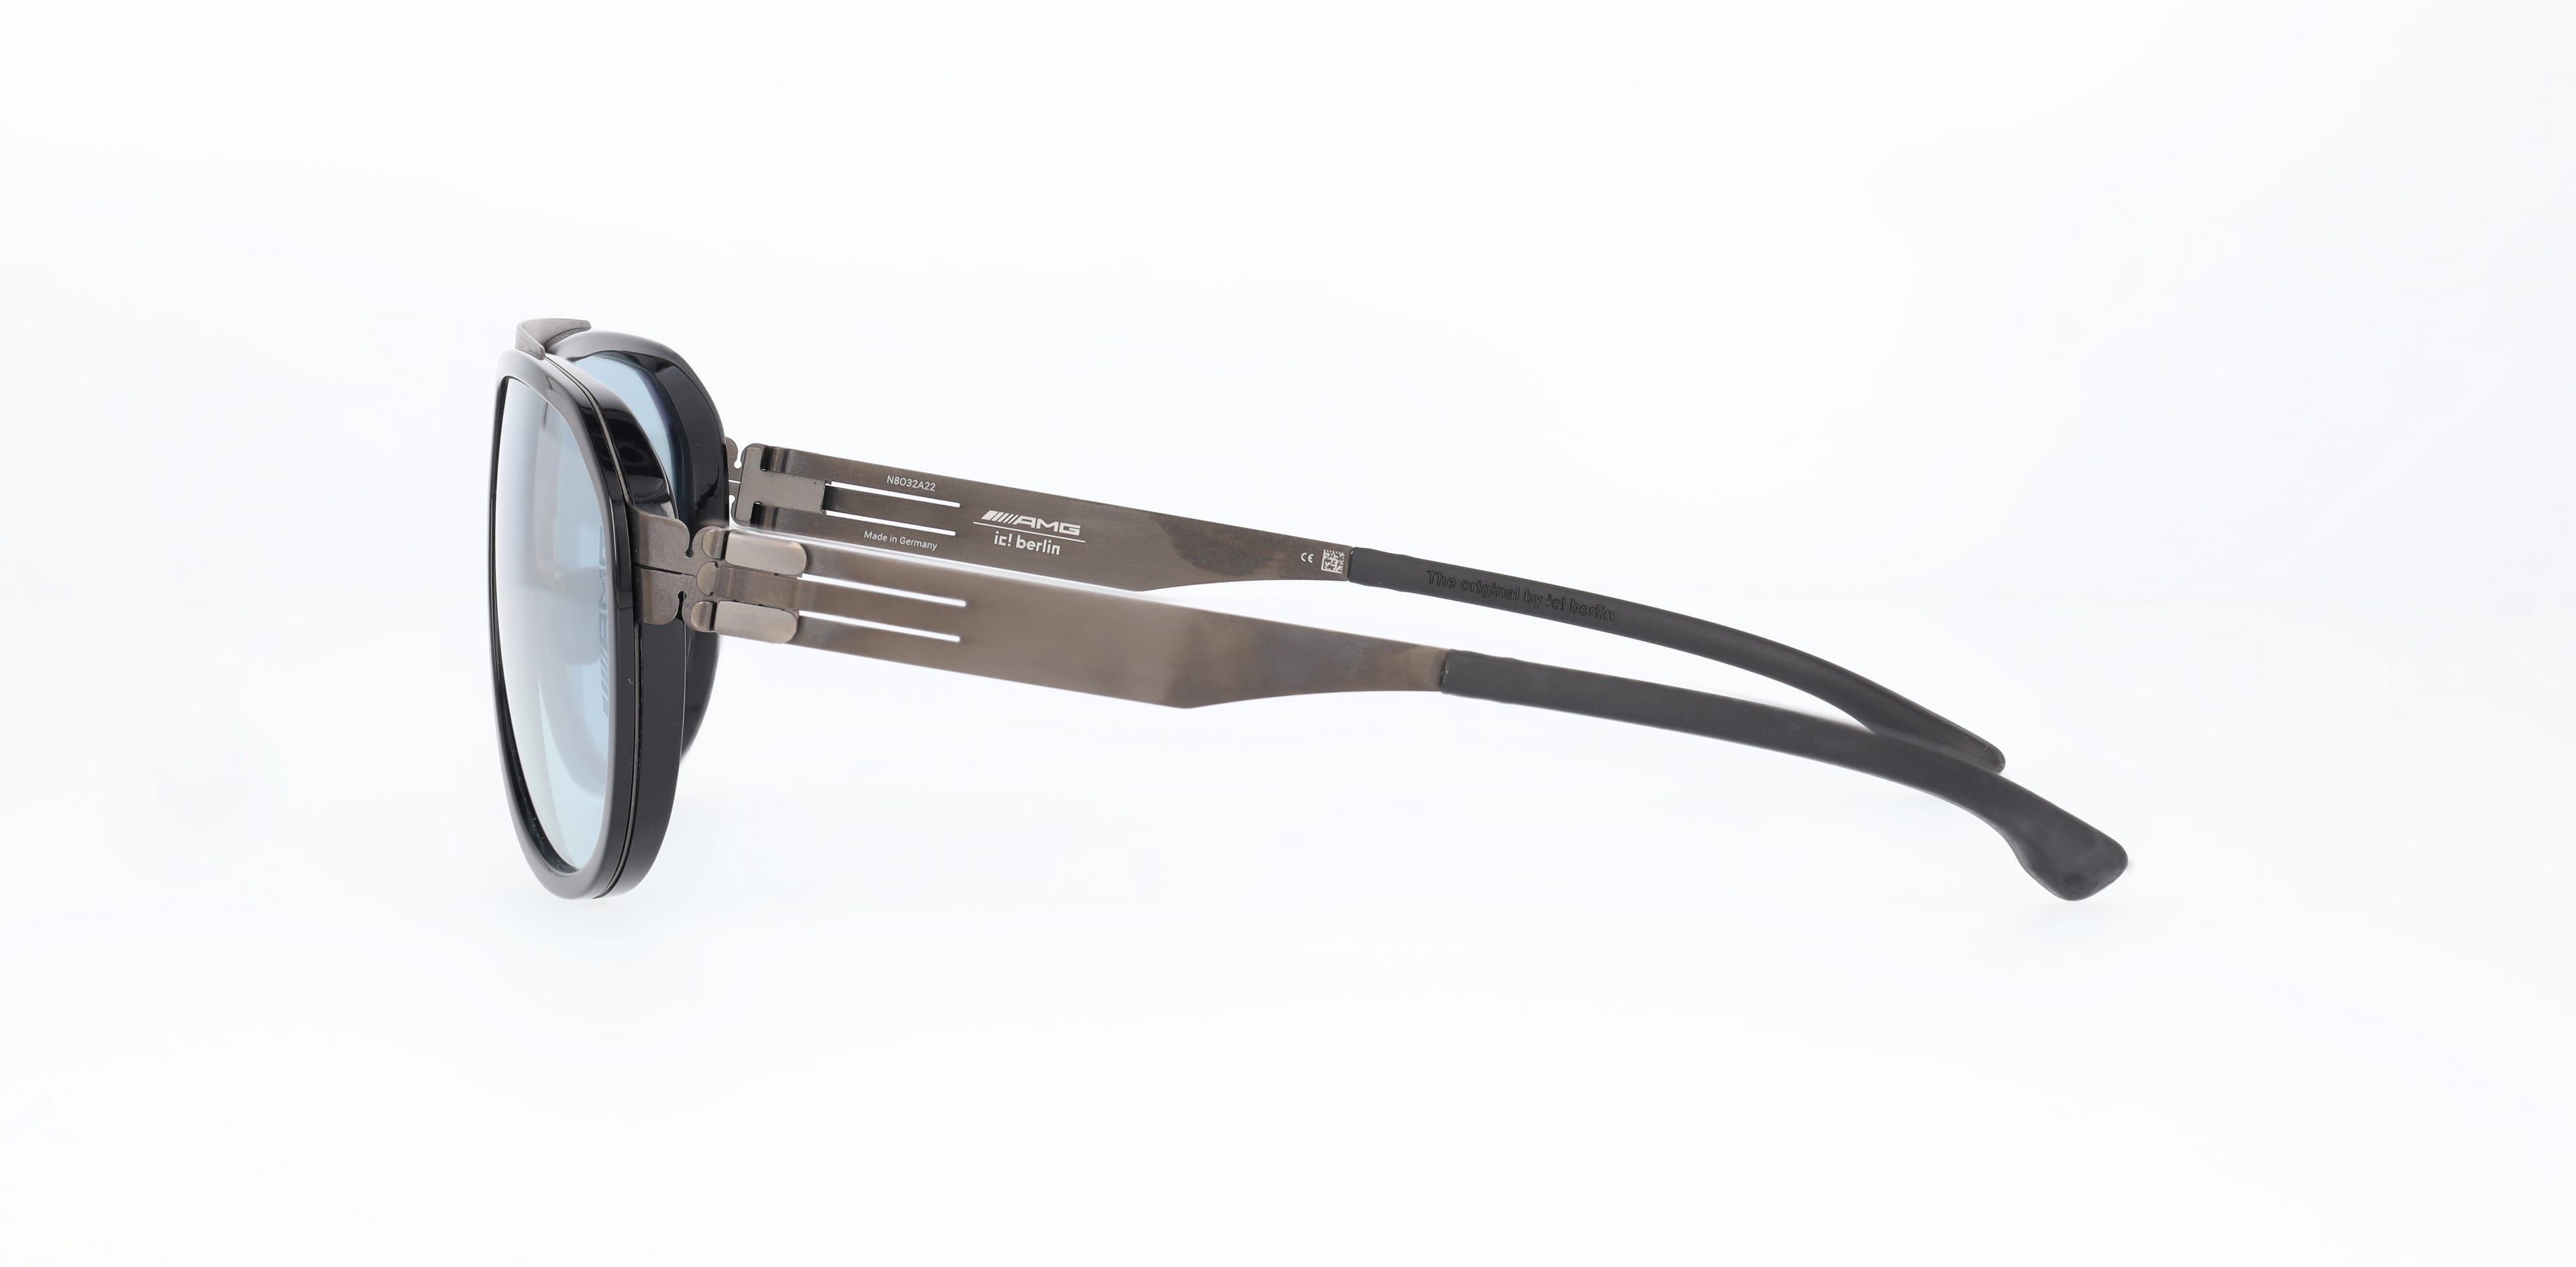 AMG Sonnenbrille, Herren, Business - graphite black, Edelstahl / Acetat, PVD beschichtet, ic! berlin